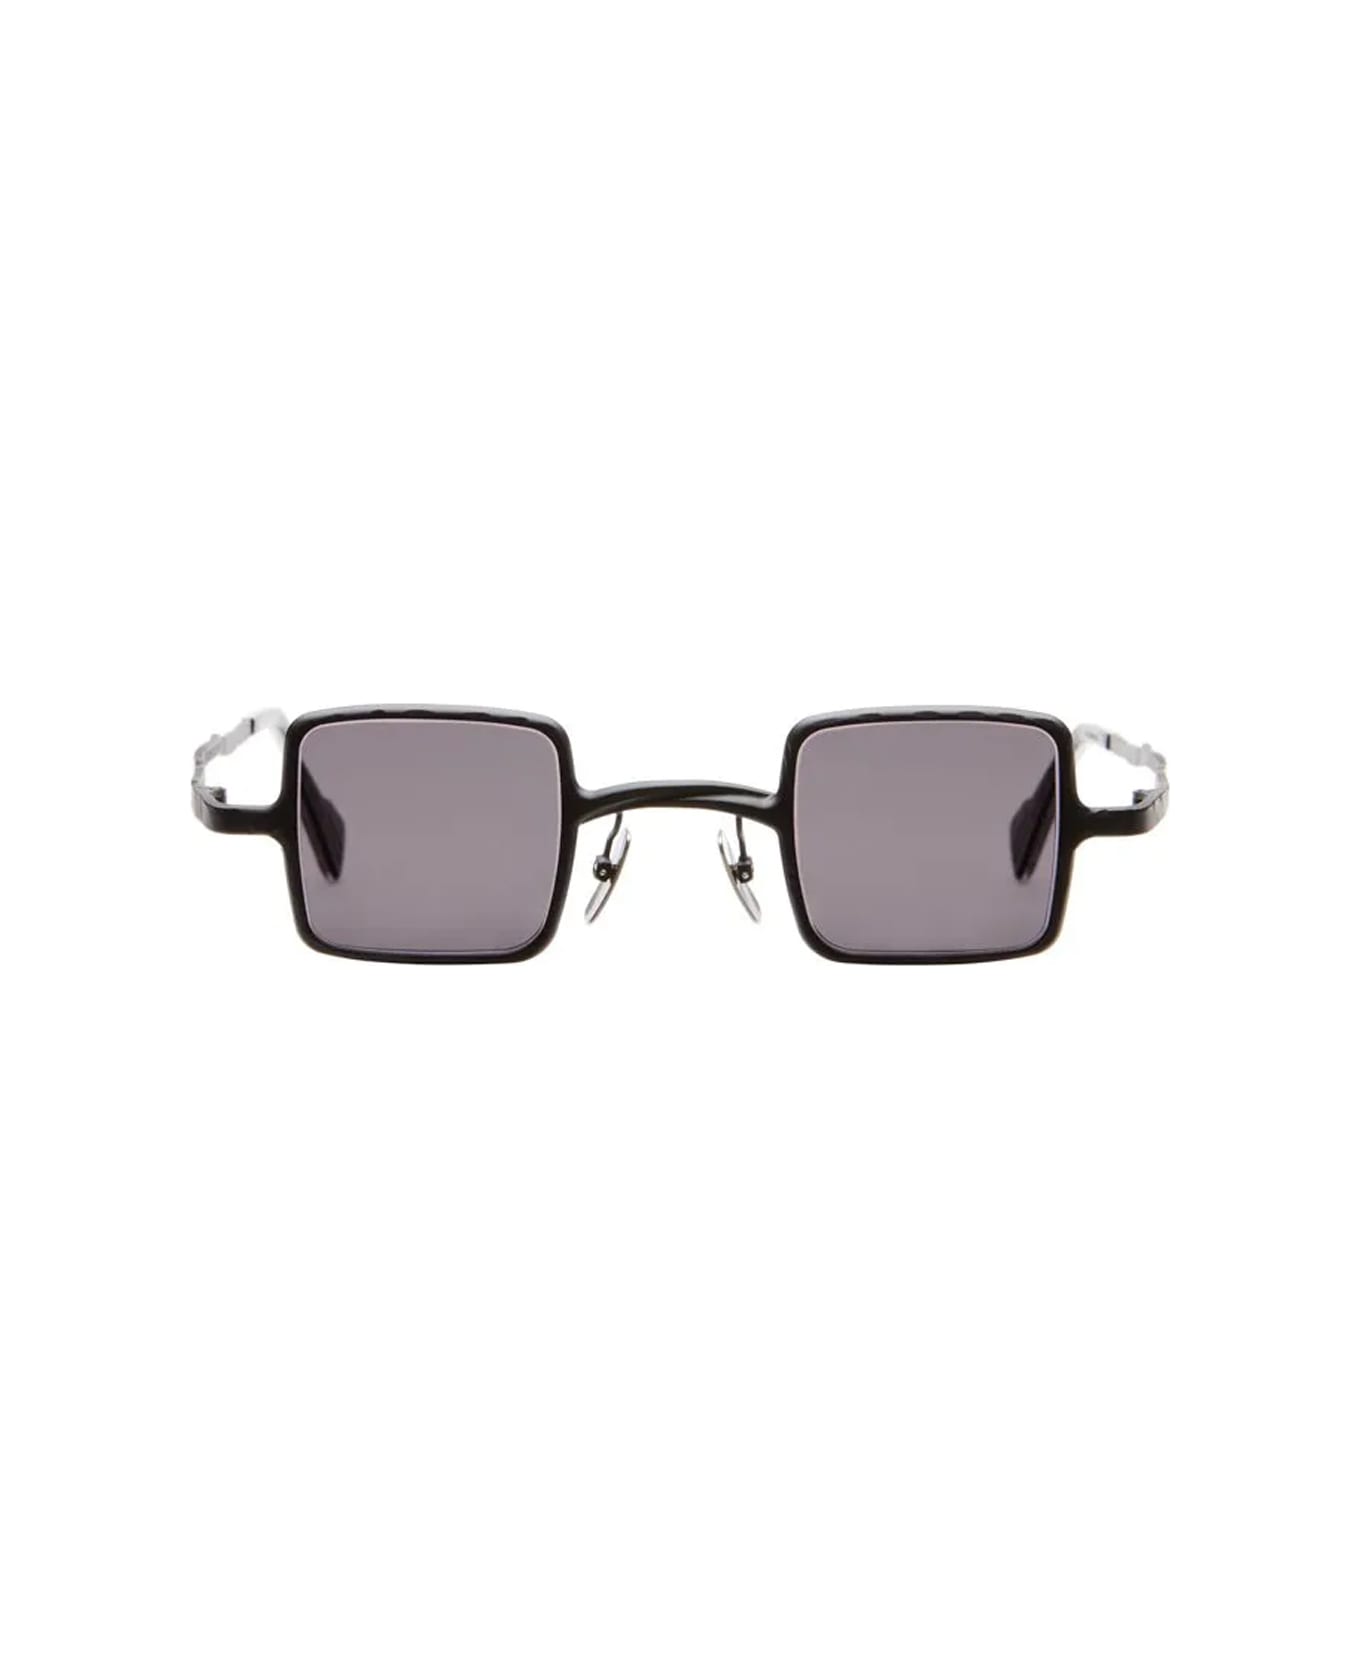 Kuboraum Maske Z21 Micrometal Z Bm 2grey Black Matte Sunglasses - Nero